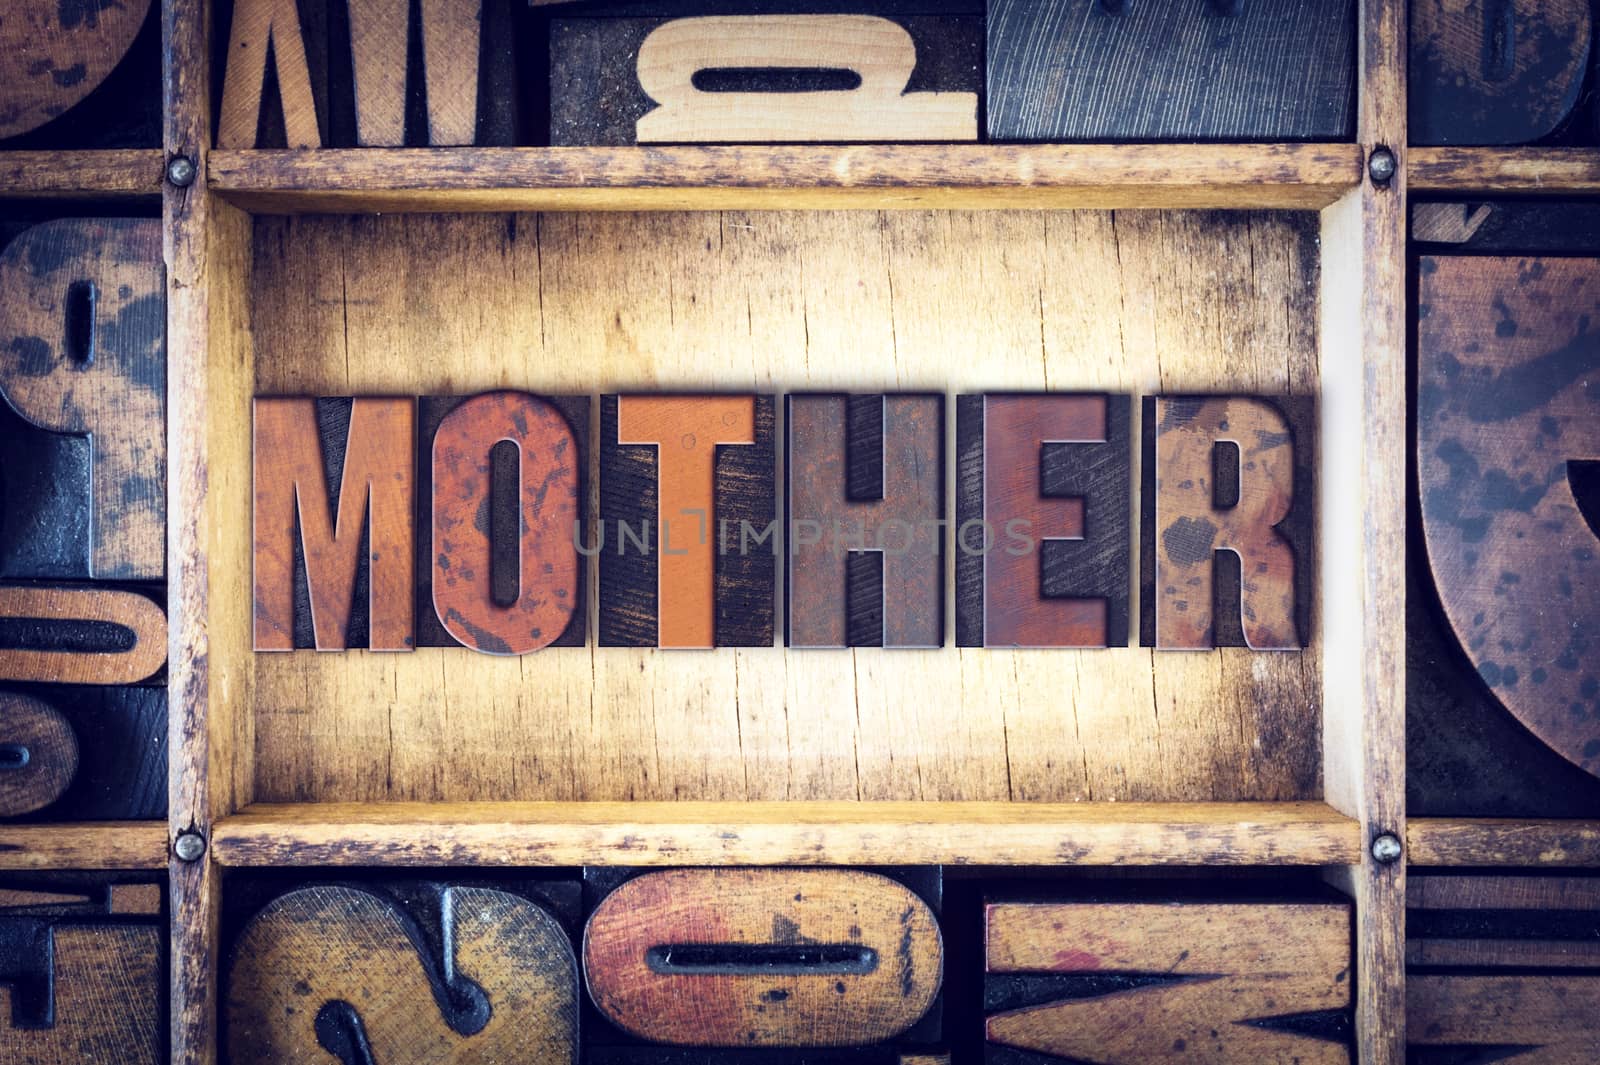 The word "Mother" written in vintage wooden letterpress type.